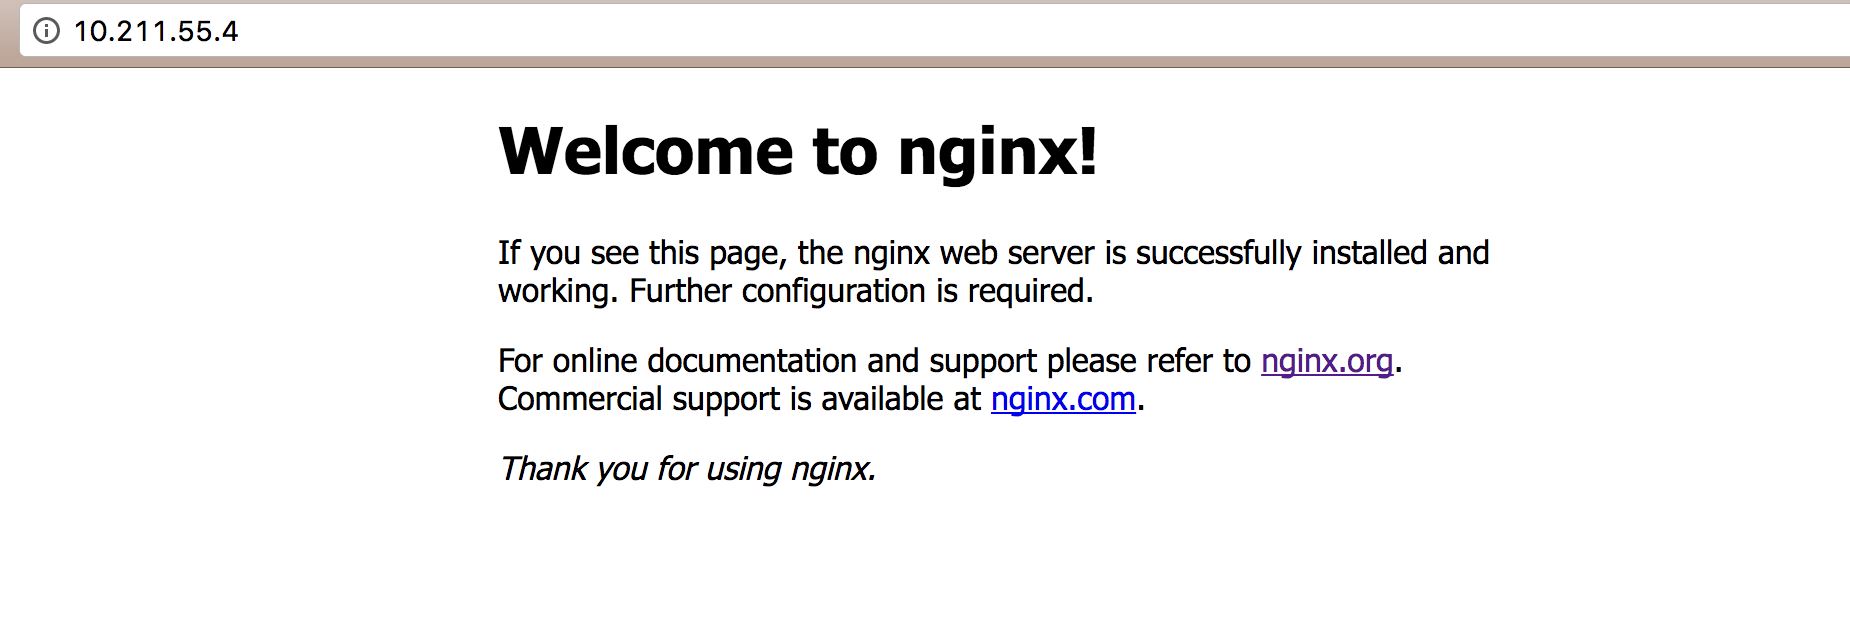 Centos 通过 Nginx 和 vsftpd 构建图片服务器的教程（图文）